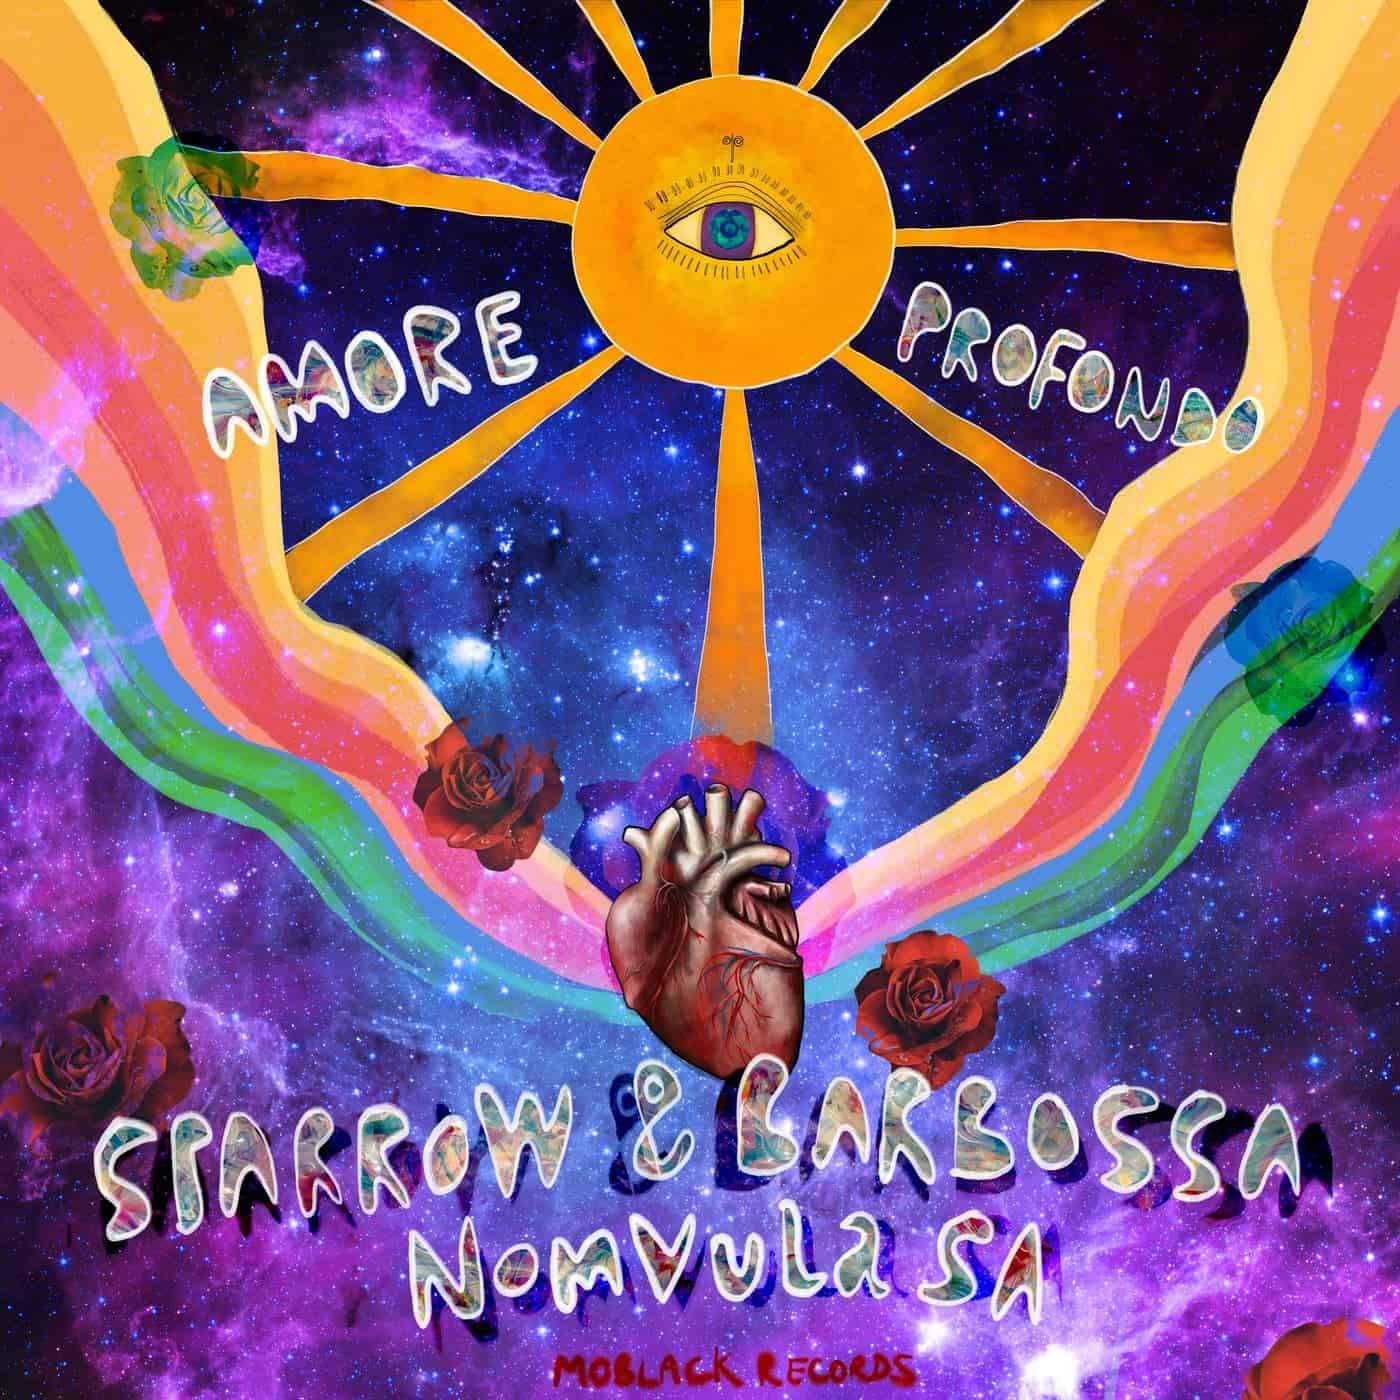 Download Sparrow & Barbossa, Nomvula SA - Amore Profondo on Electrobuzz